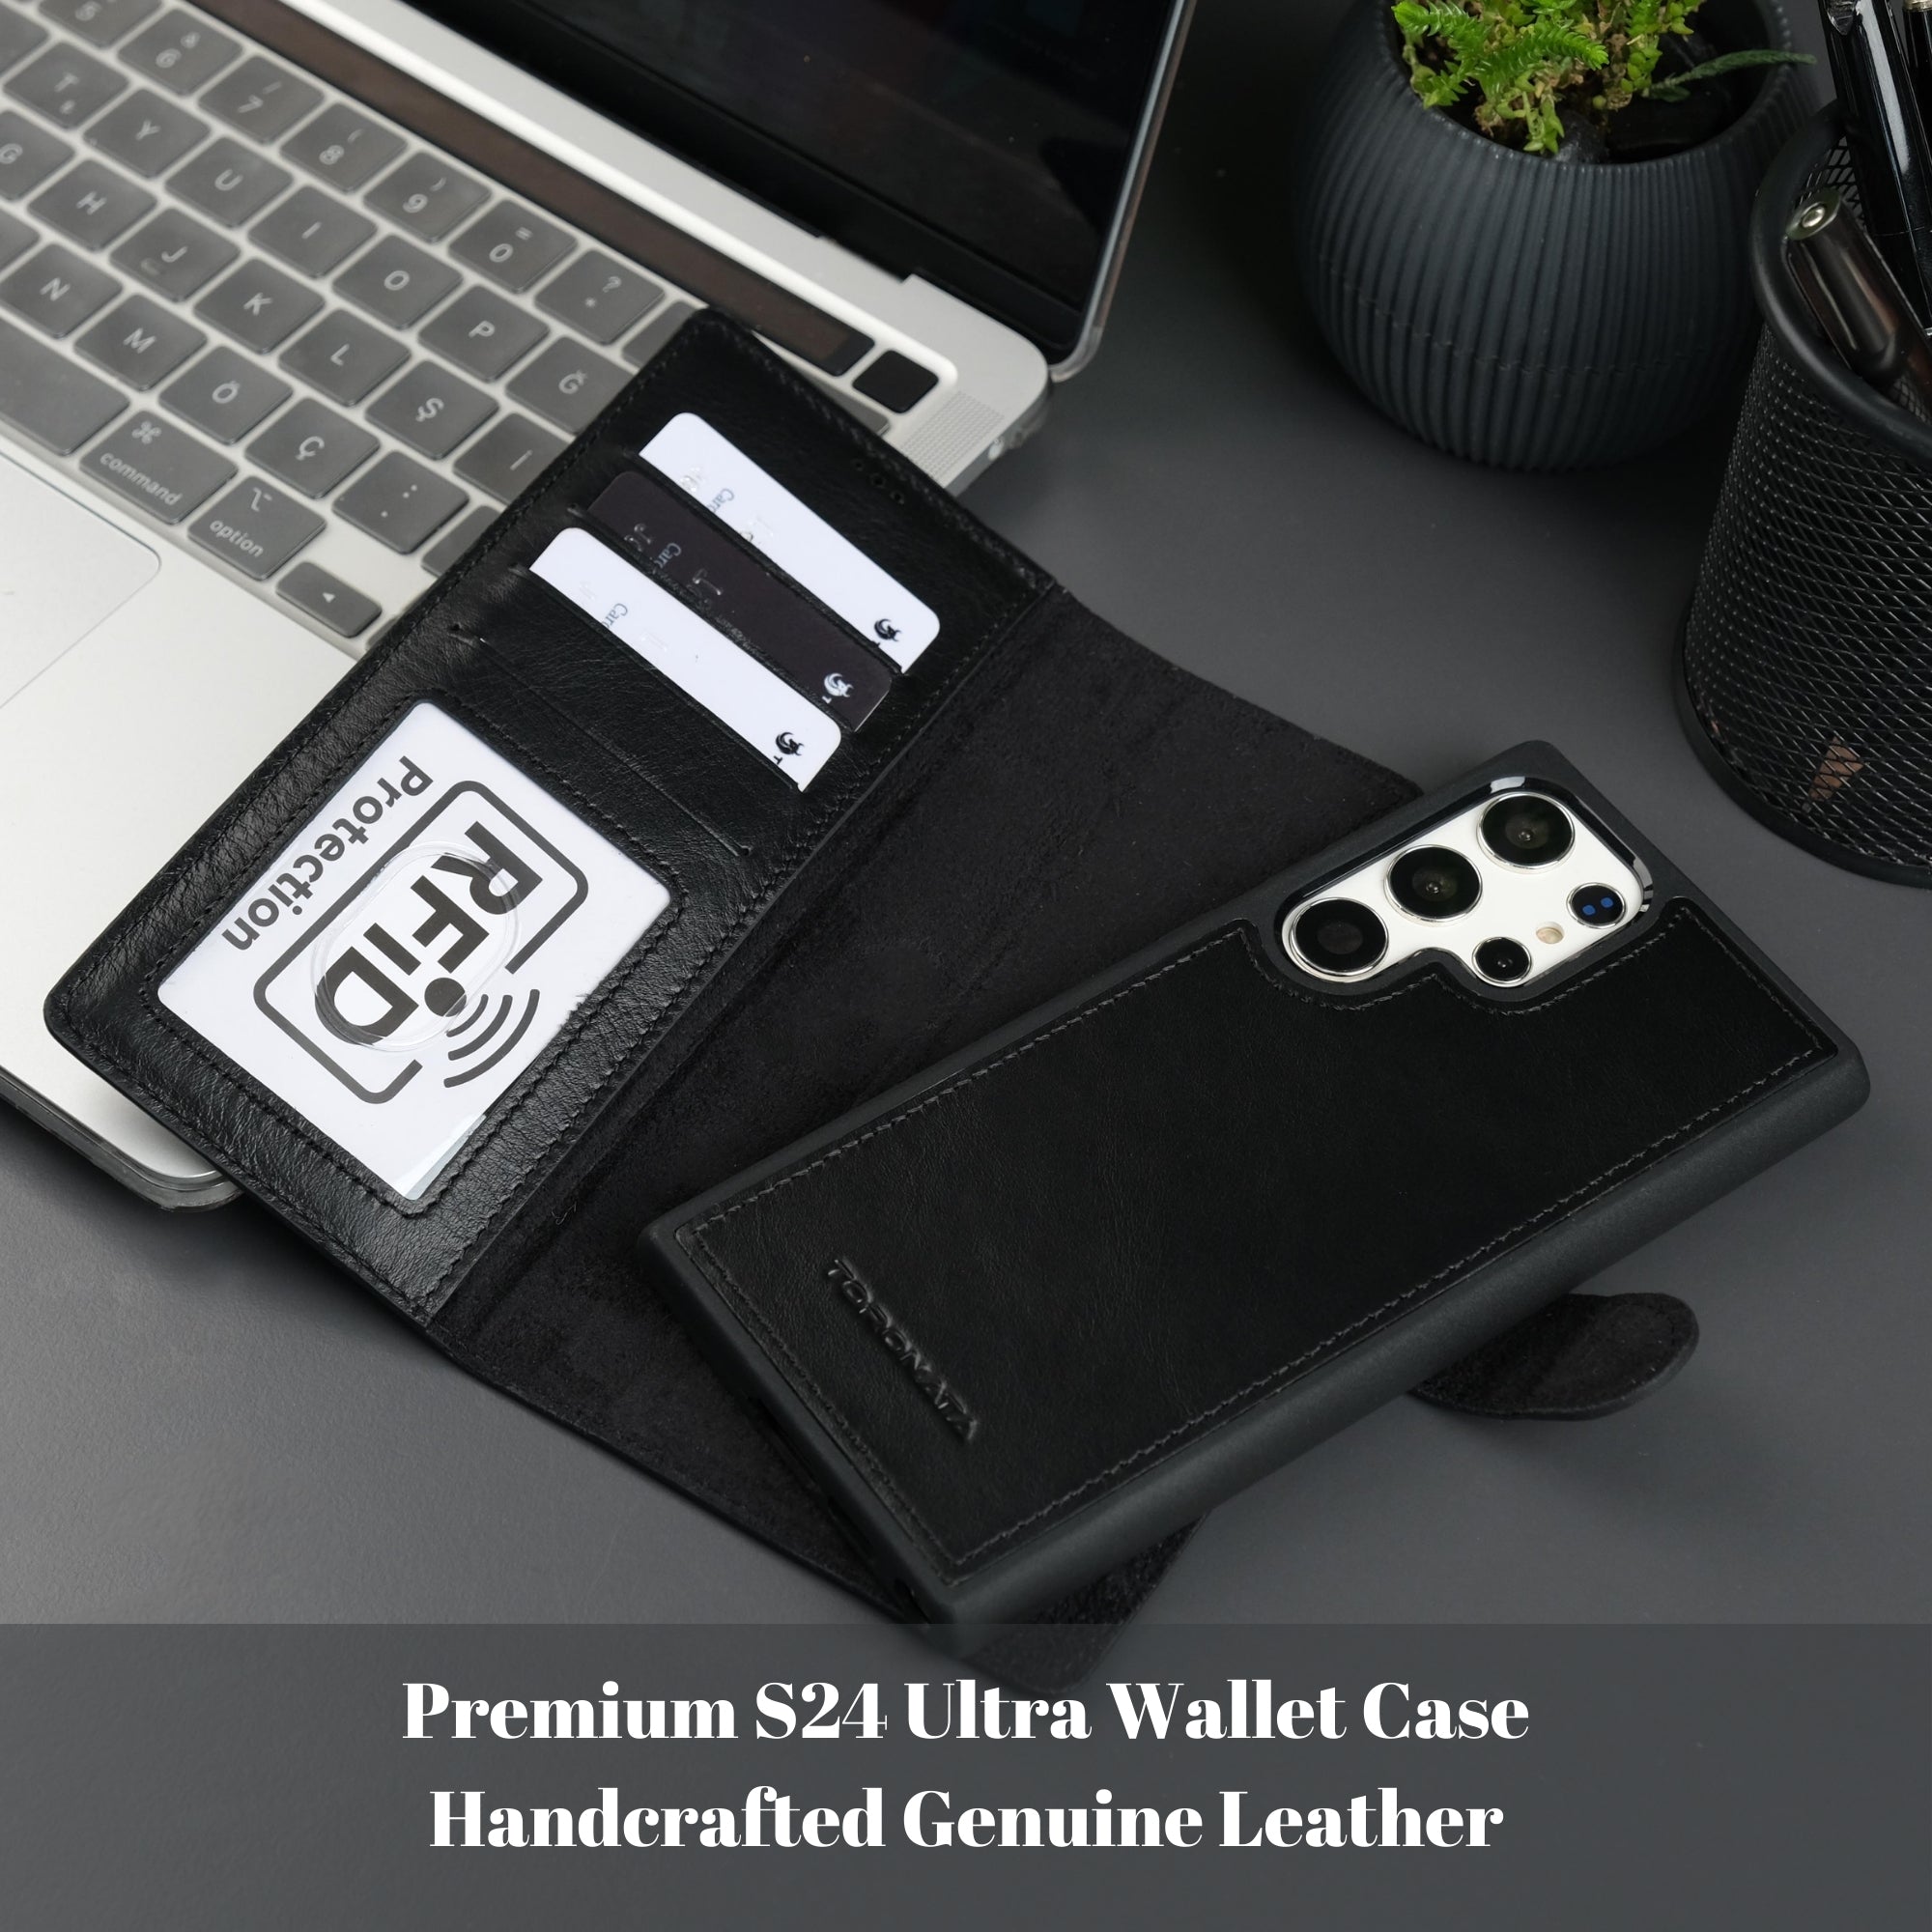 Premium S24 Ultra Wallet Case | Handcrafted Genuine Leather - TORONATA